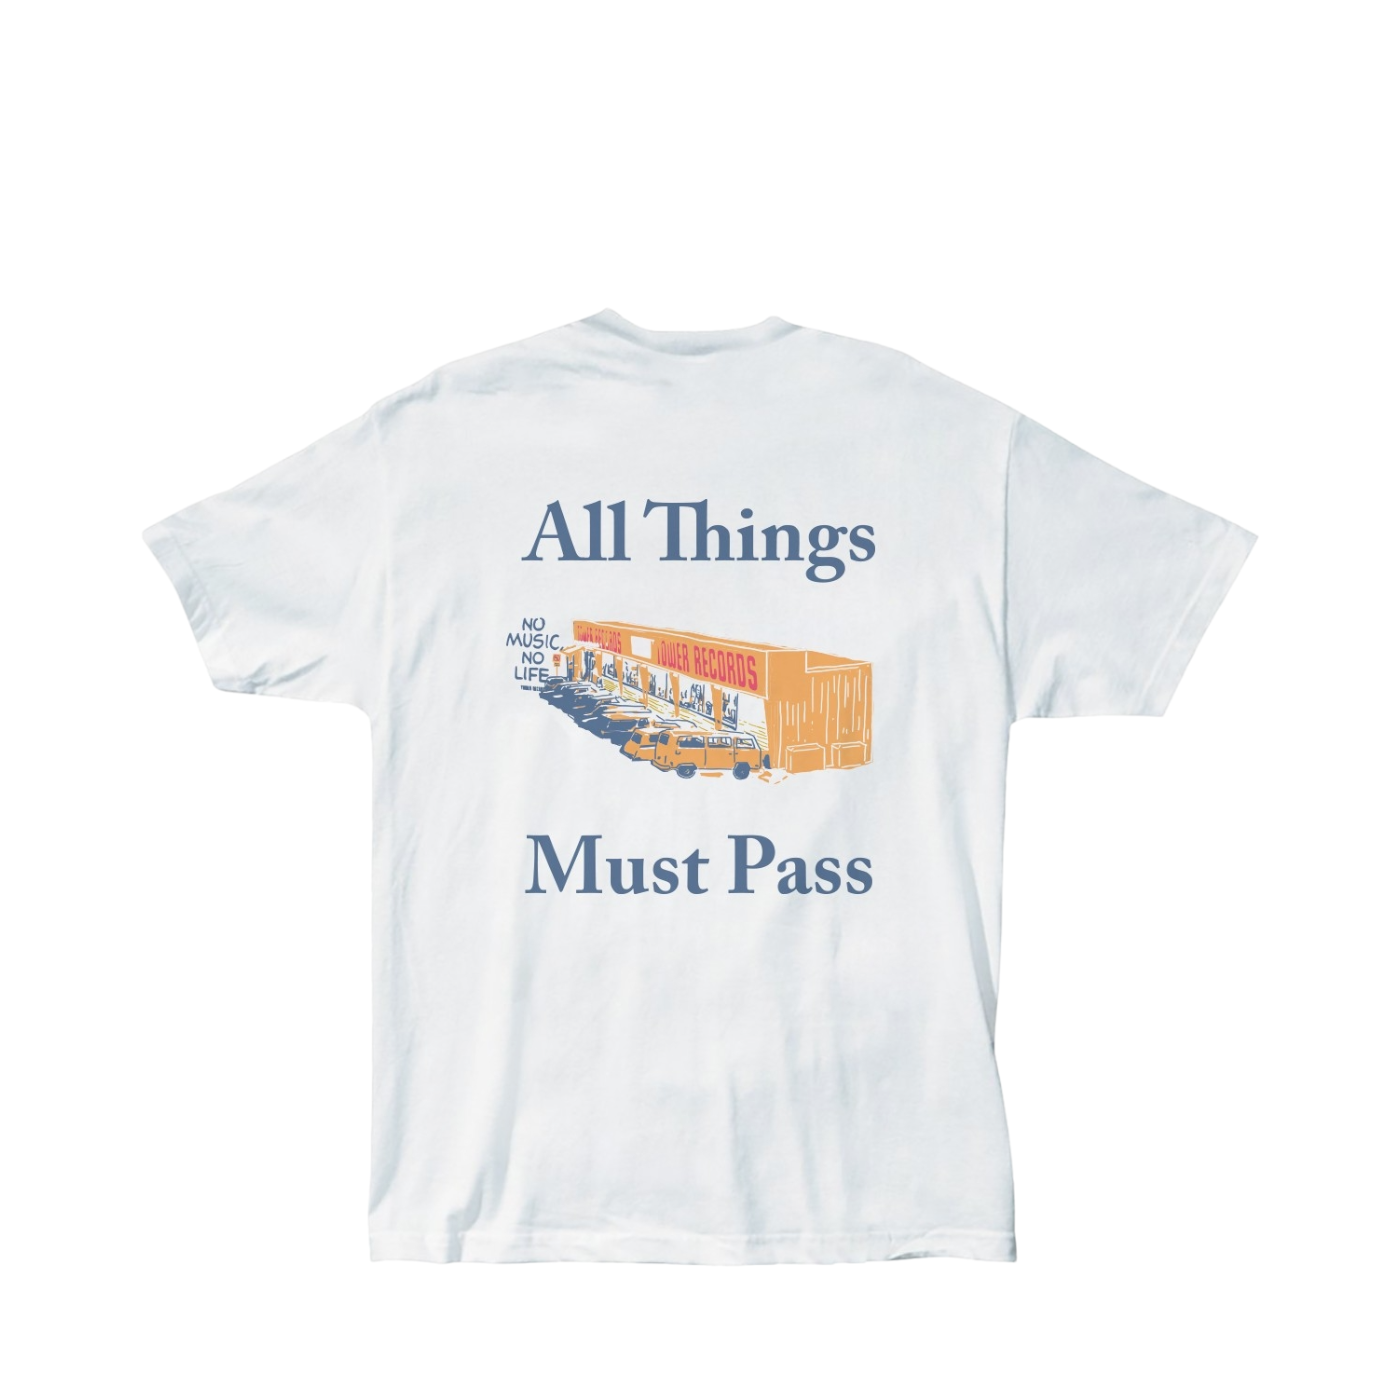 All things T-Shirt (White)